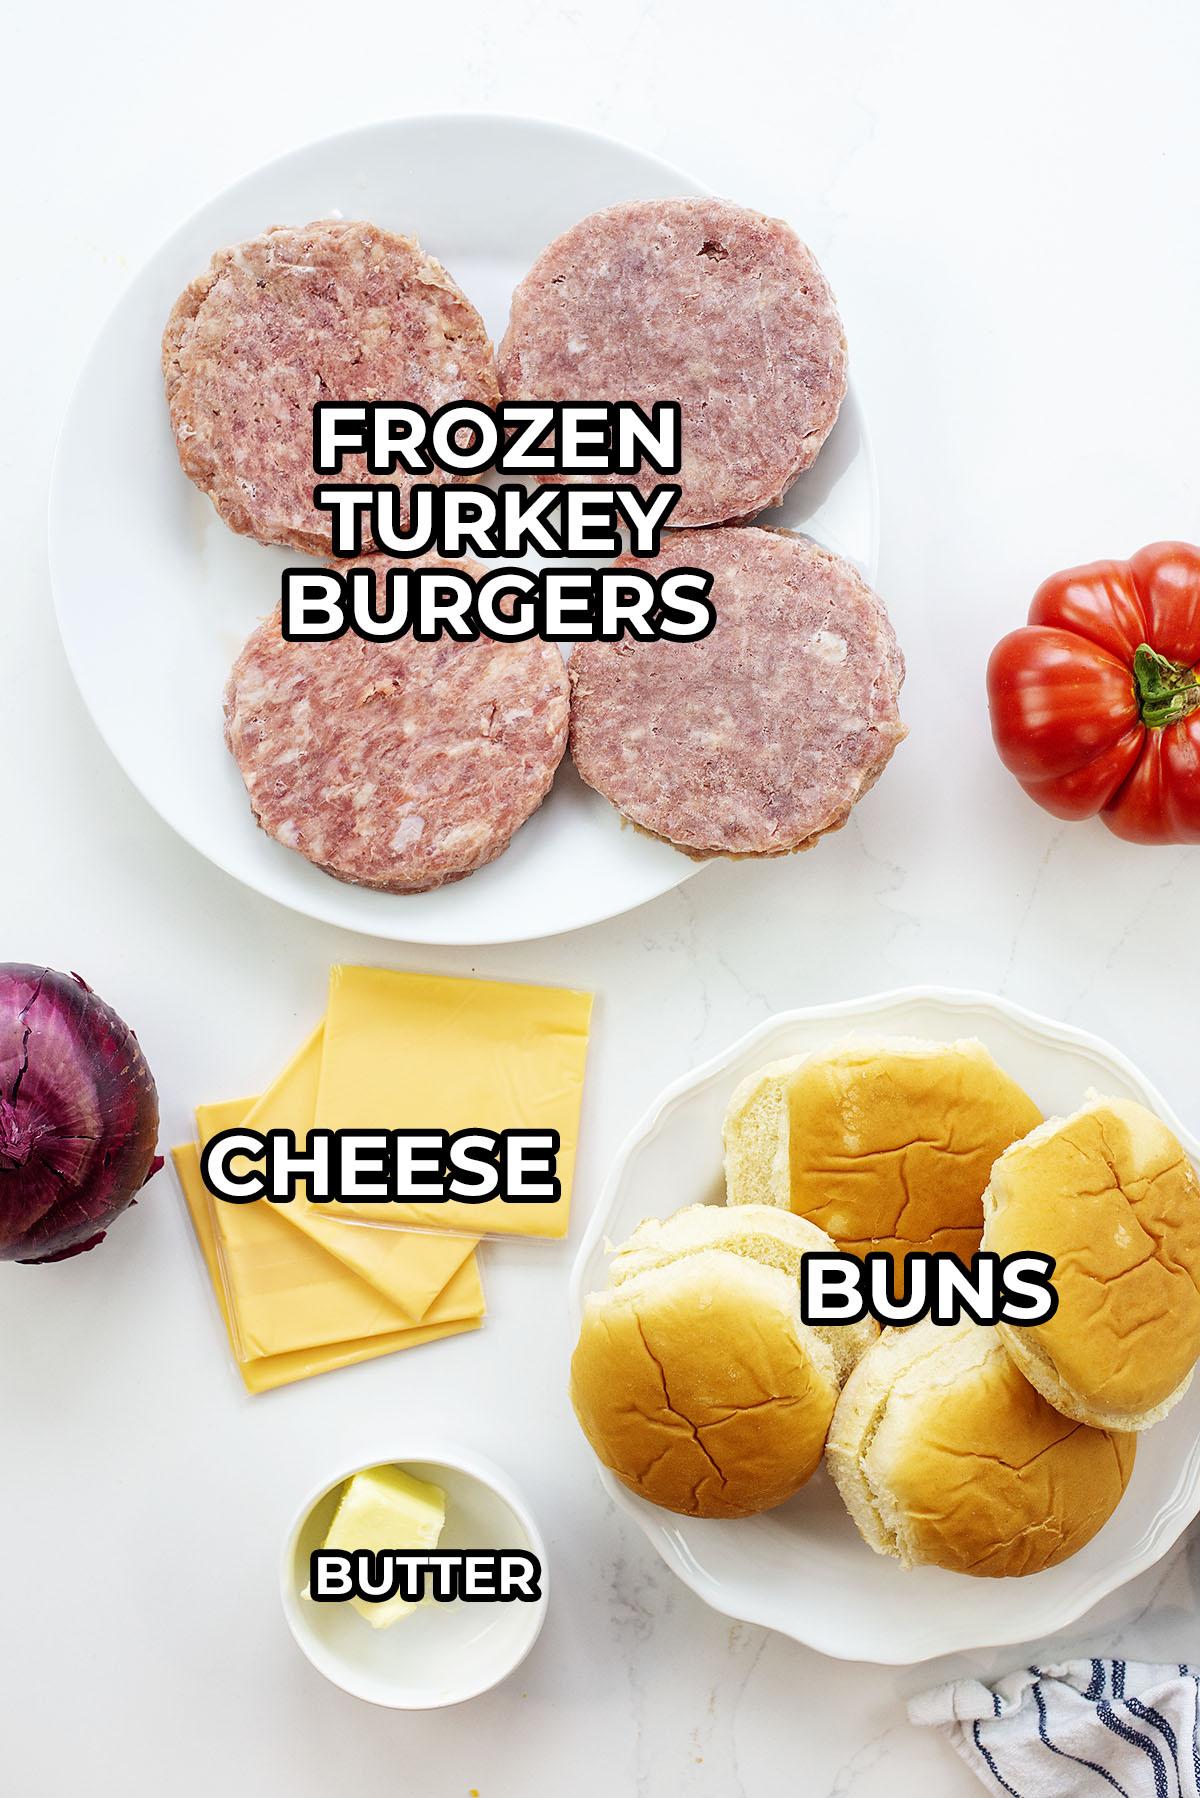 Frozen turkey burger ingredients on a countertop.